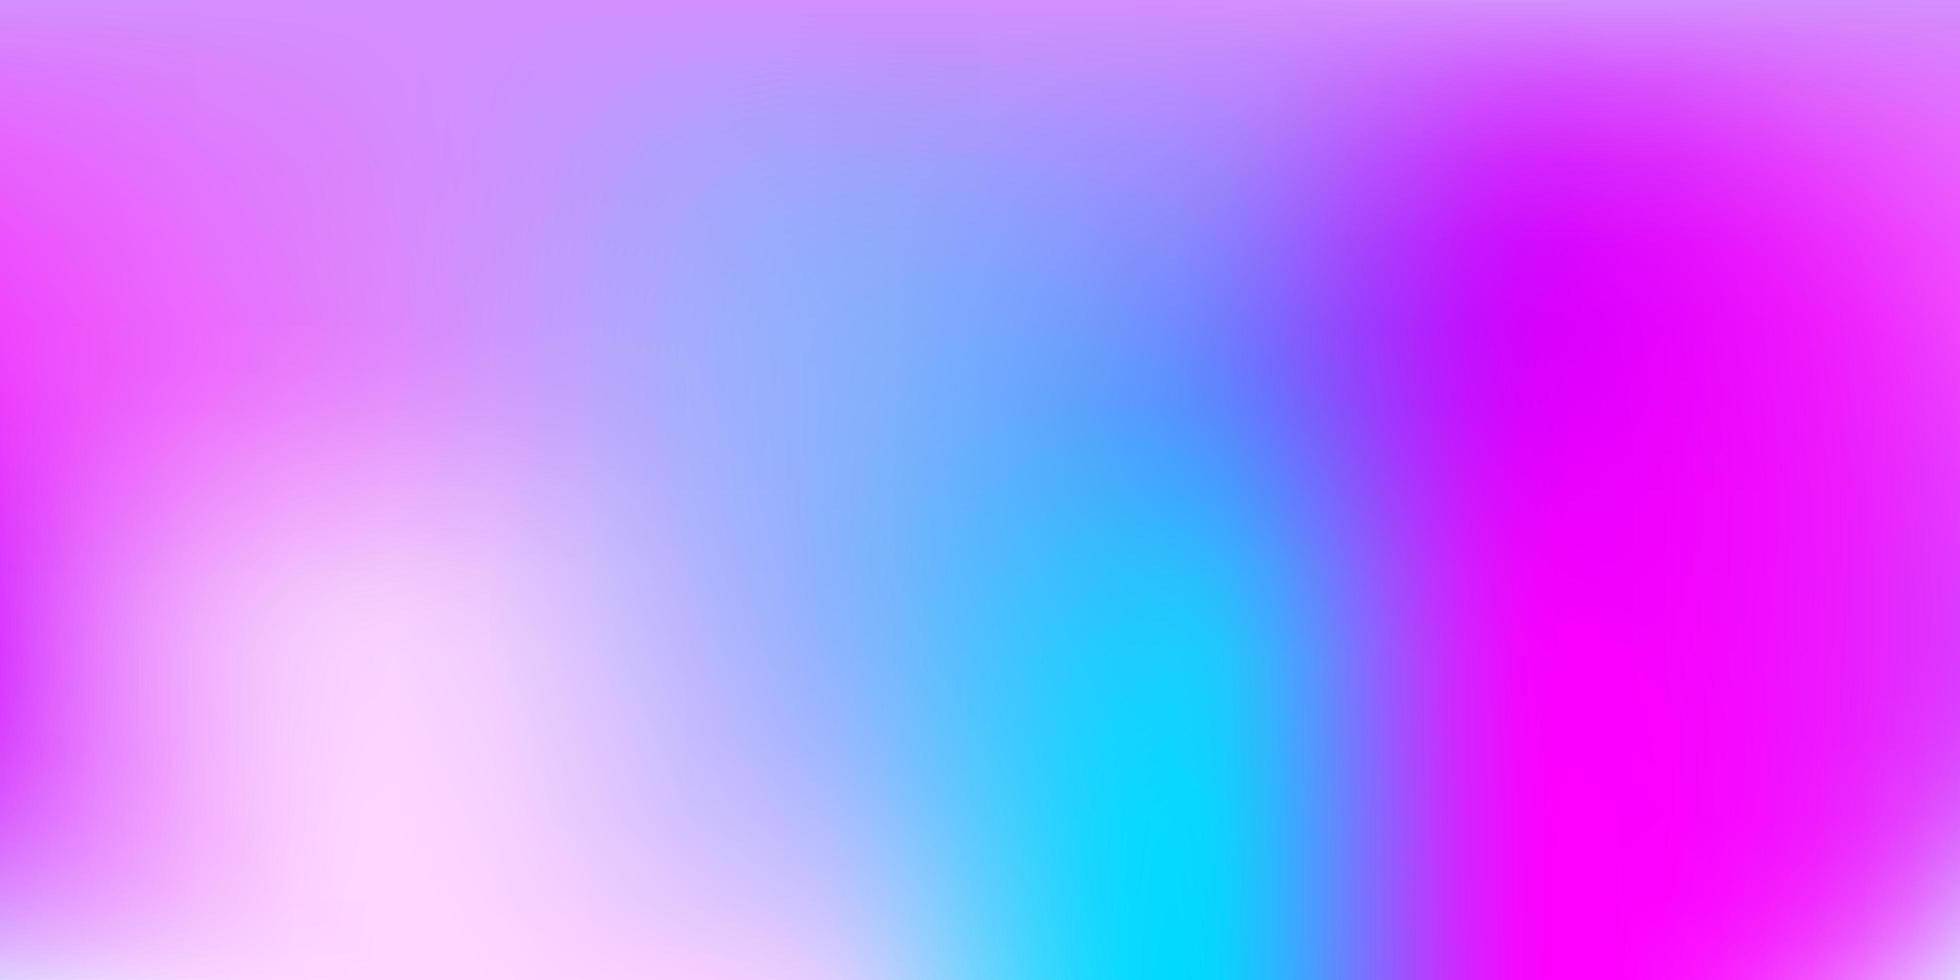 sfondo sfocato sfumato vettoriale rosa chiaro, blu.